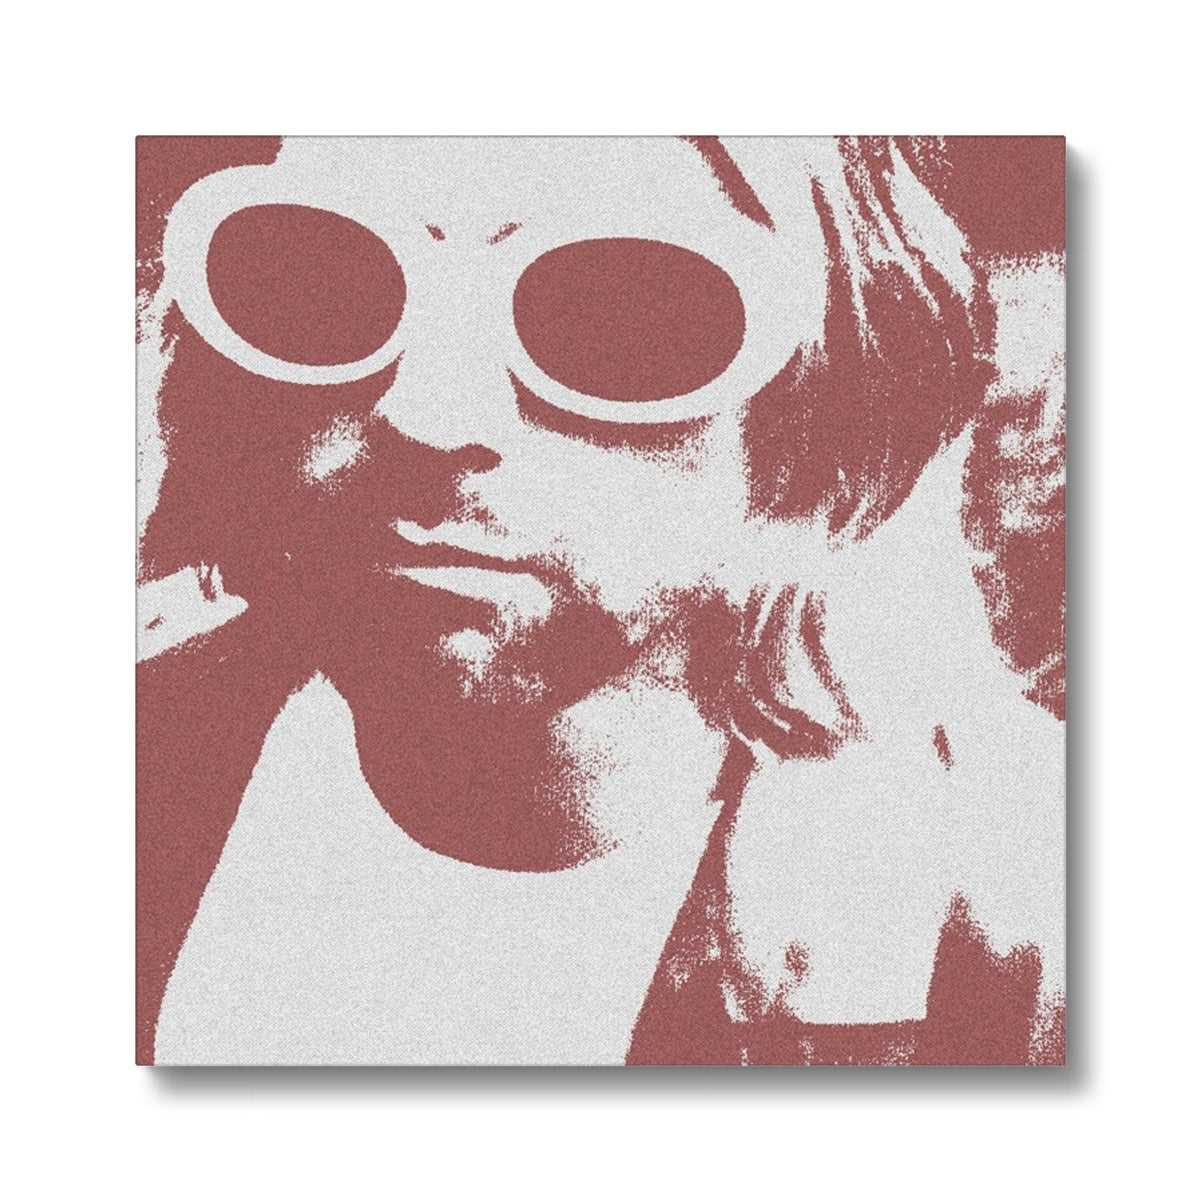 Kurt Cobain Print Eco Canvas